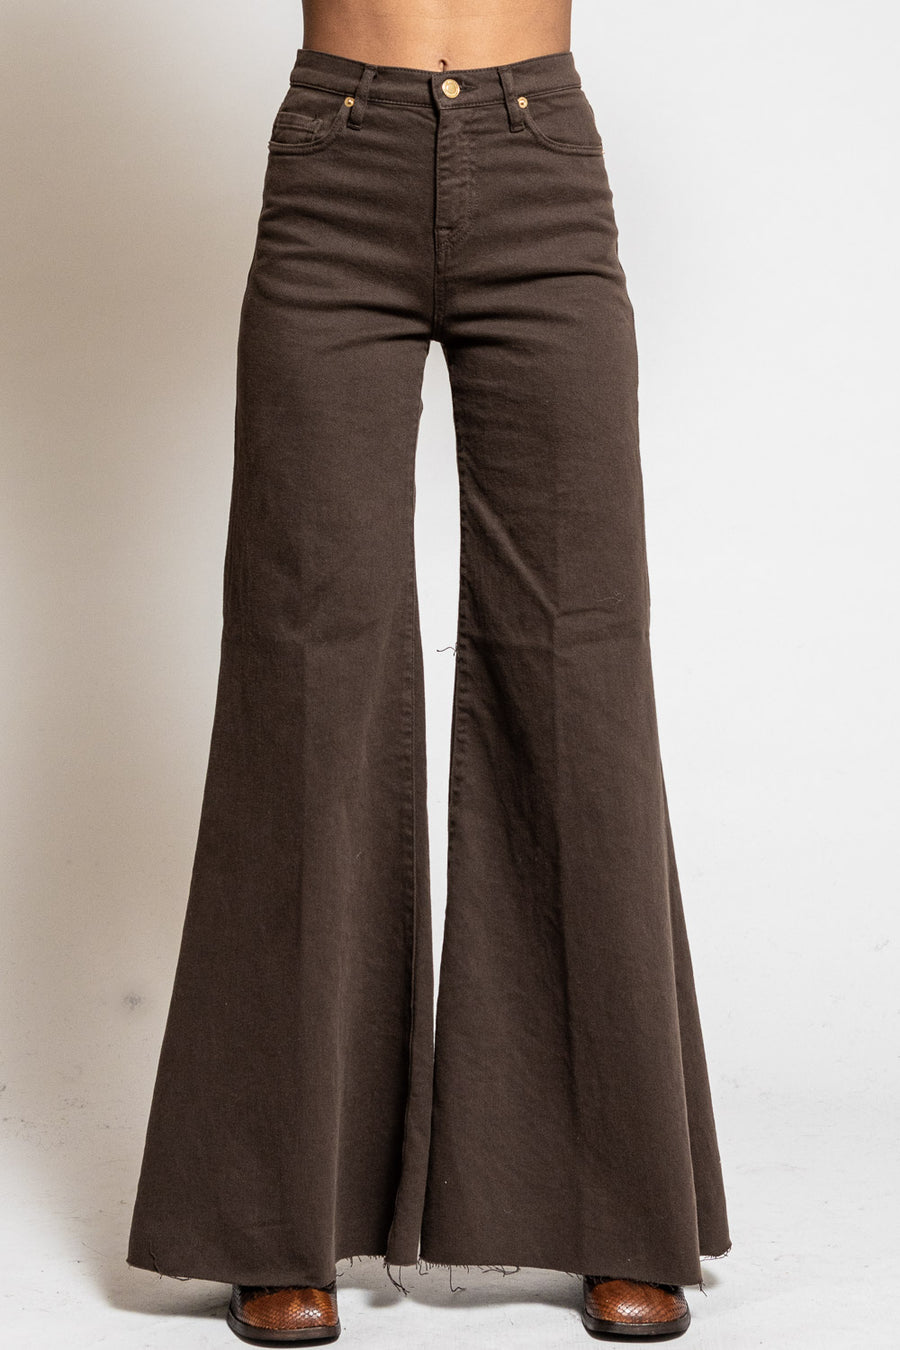 Pantalone Jeans da donna in cotone chocolate Anna_t